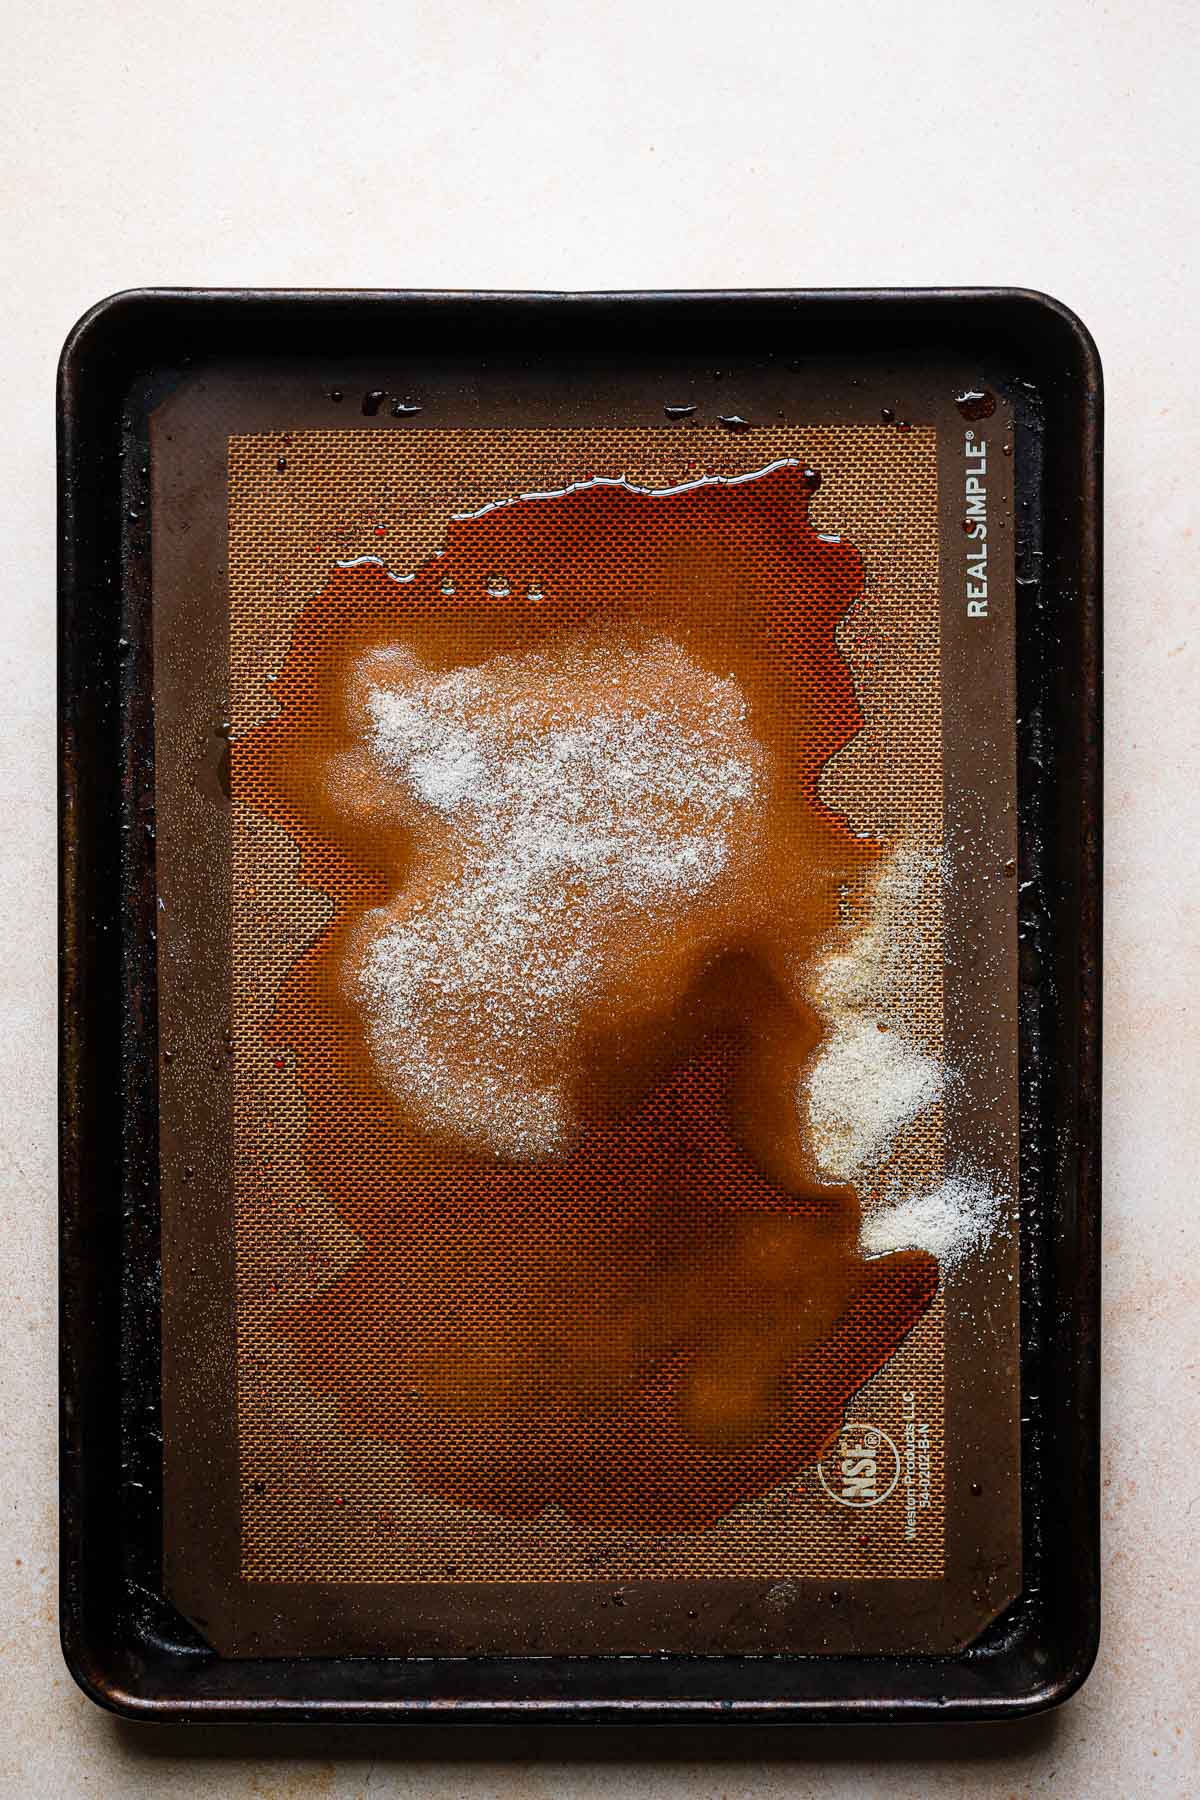 Caramelized sugar on a tray